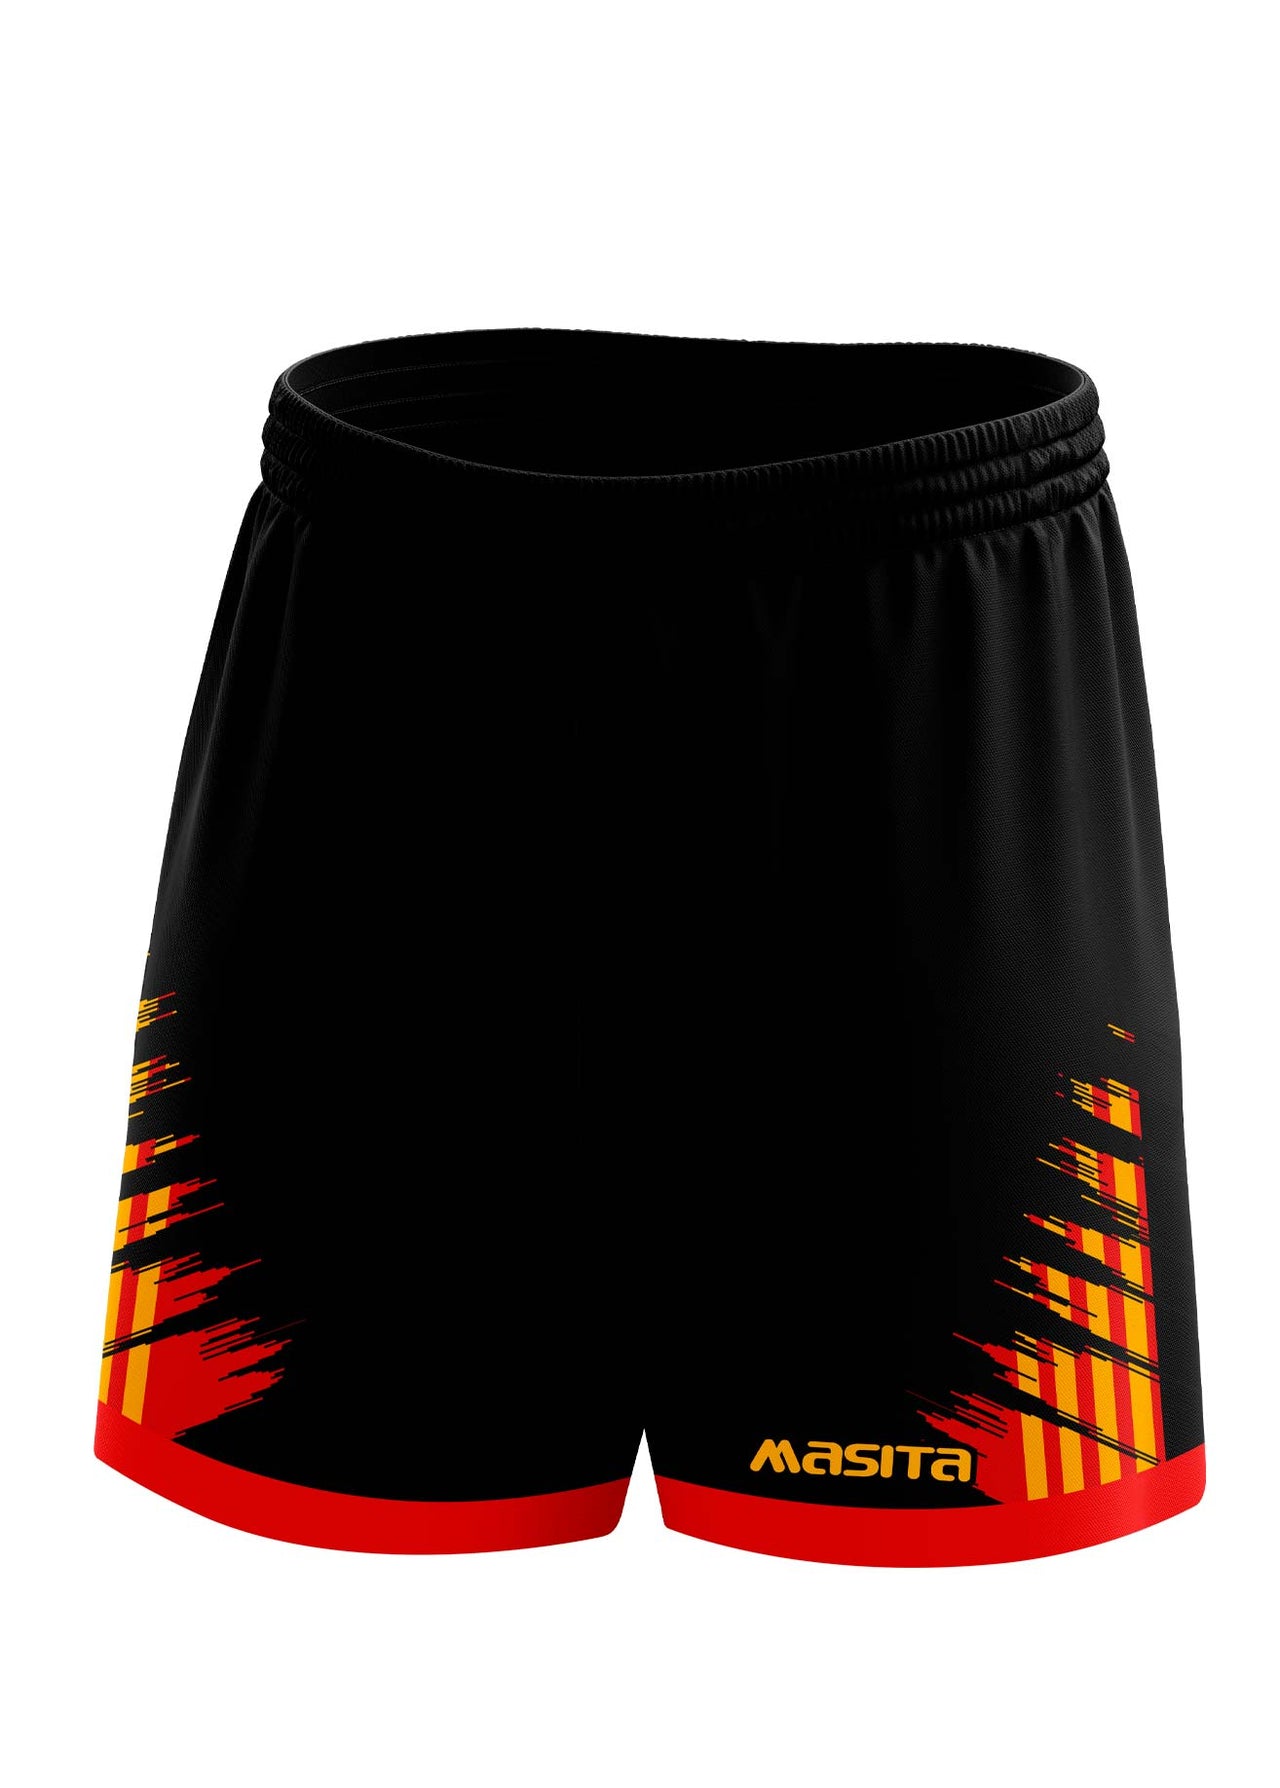 Barkley Gaelic Shorts Black/Red/Amber Adult